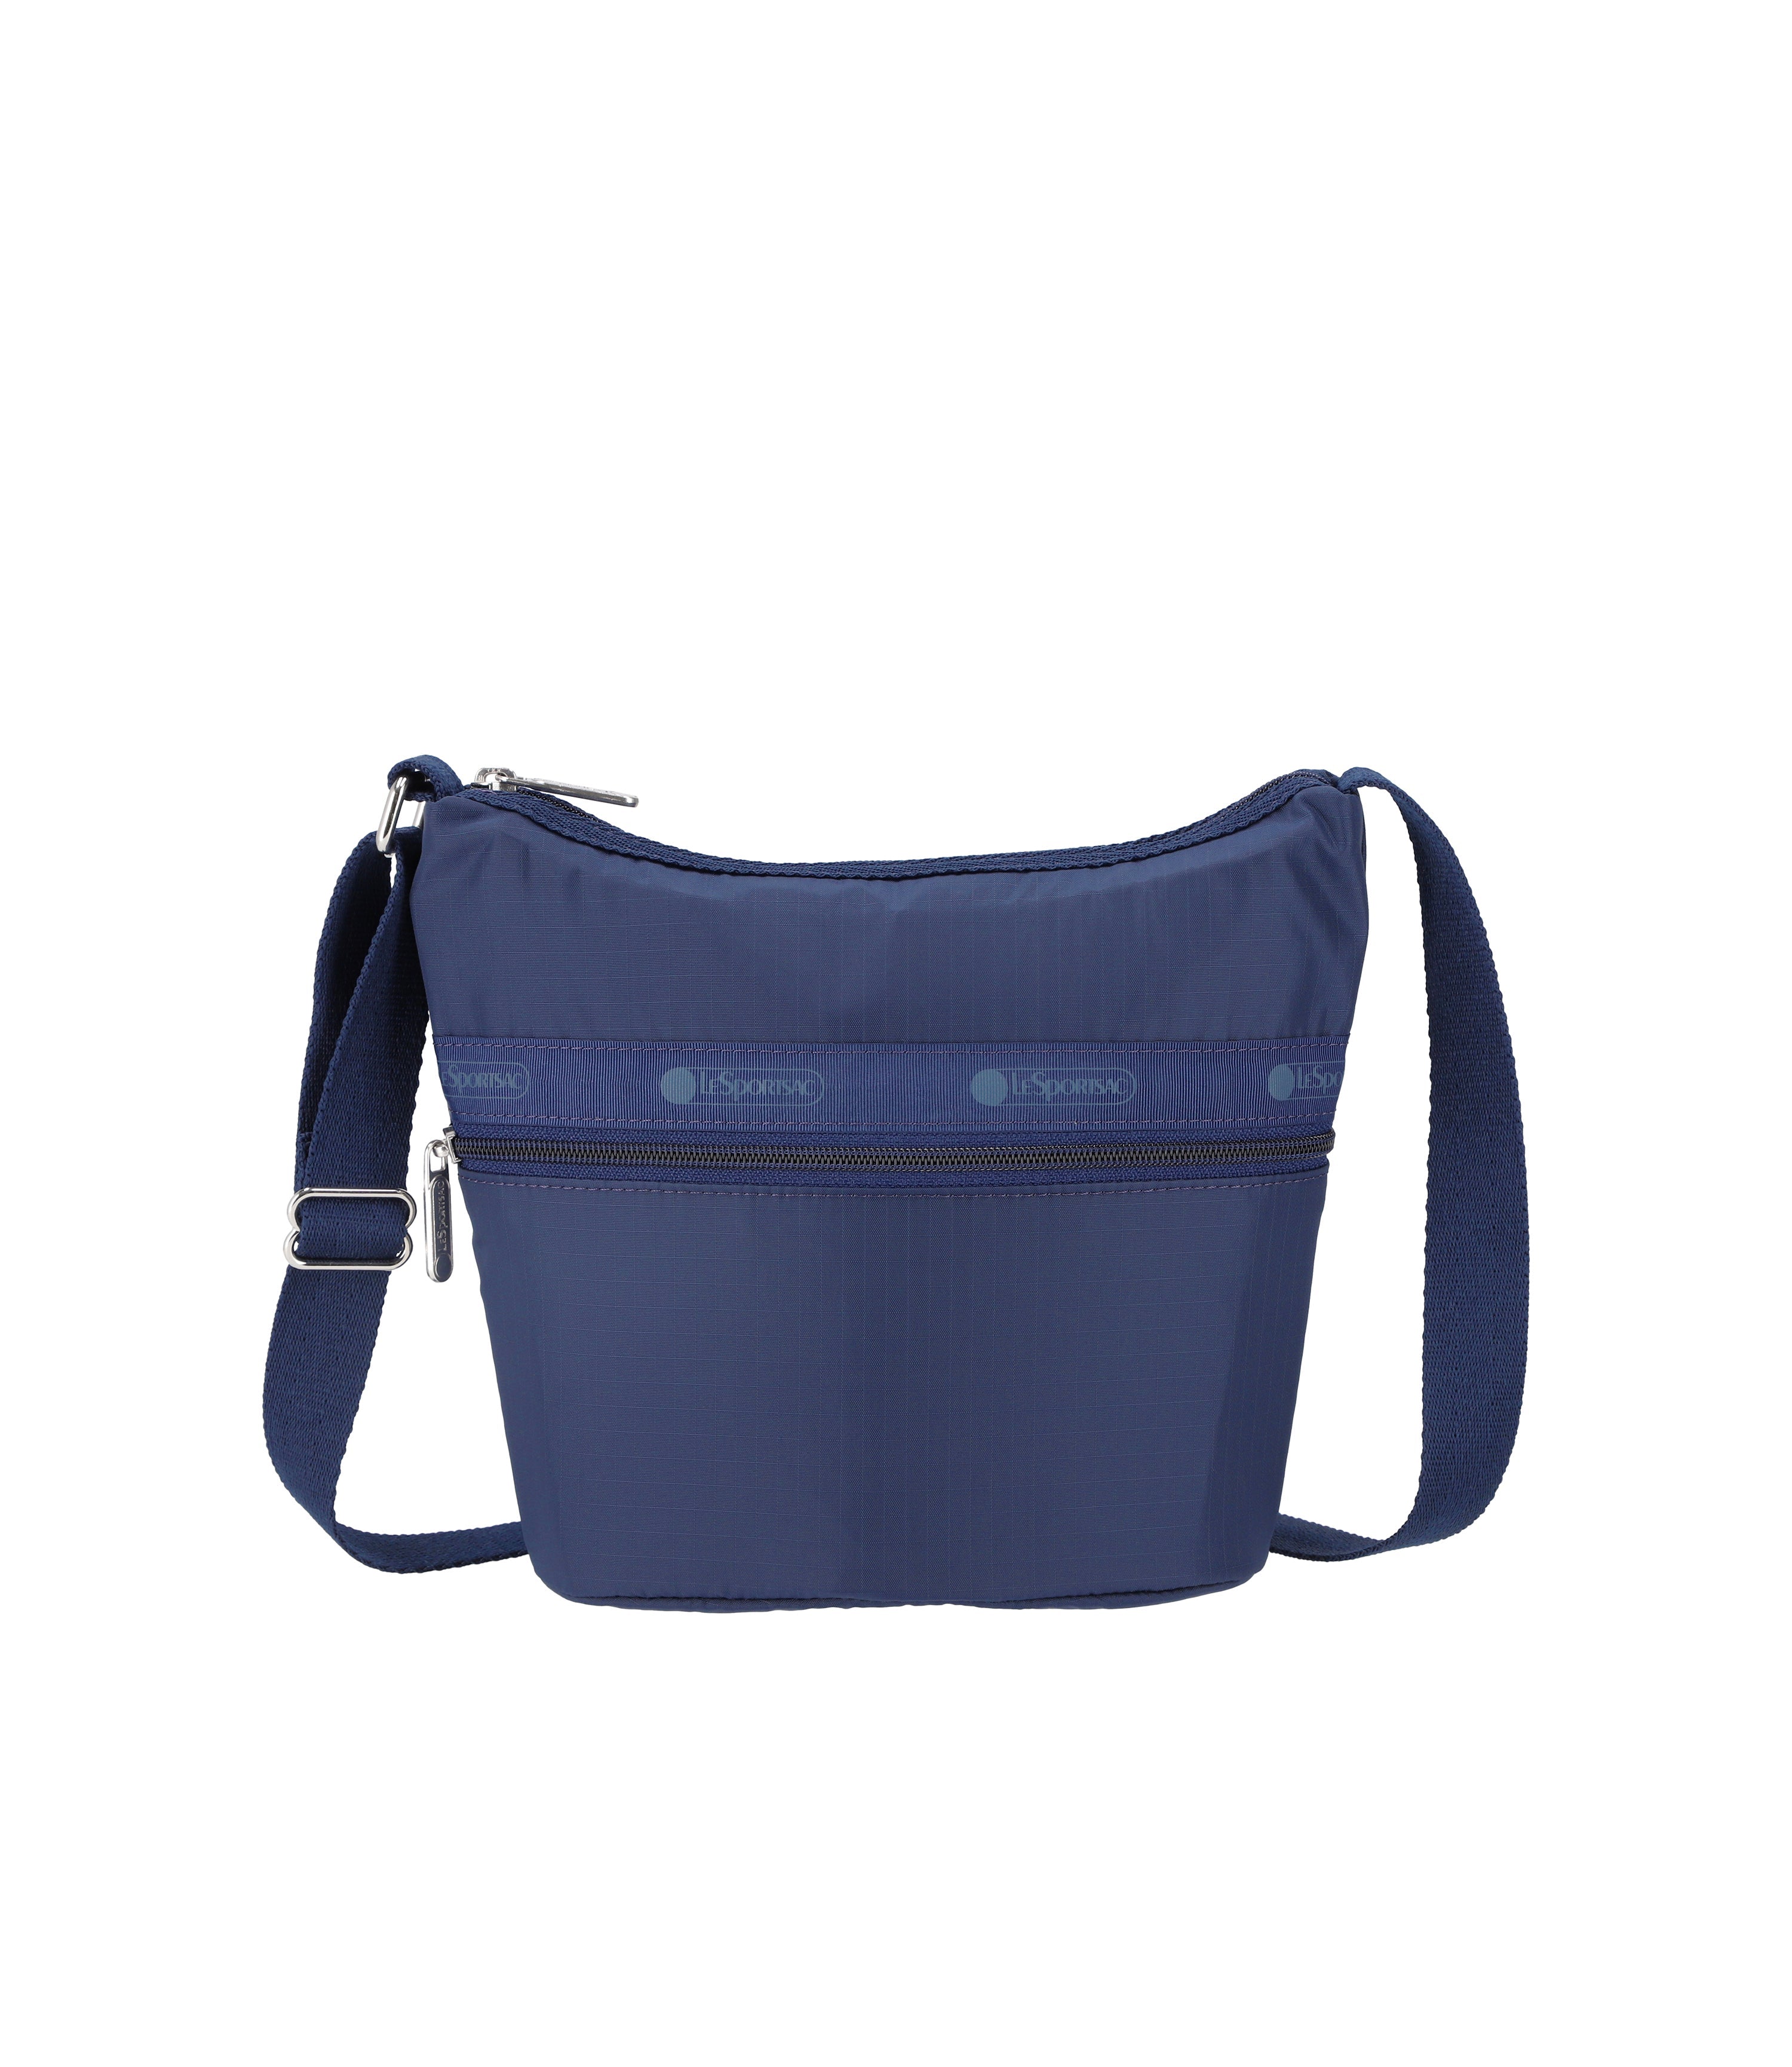 Mini Bucket Shoulder Bag - Navy Blue solid